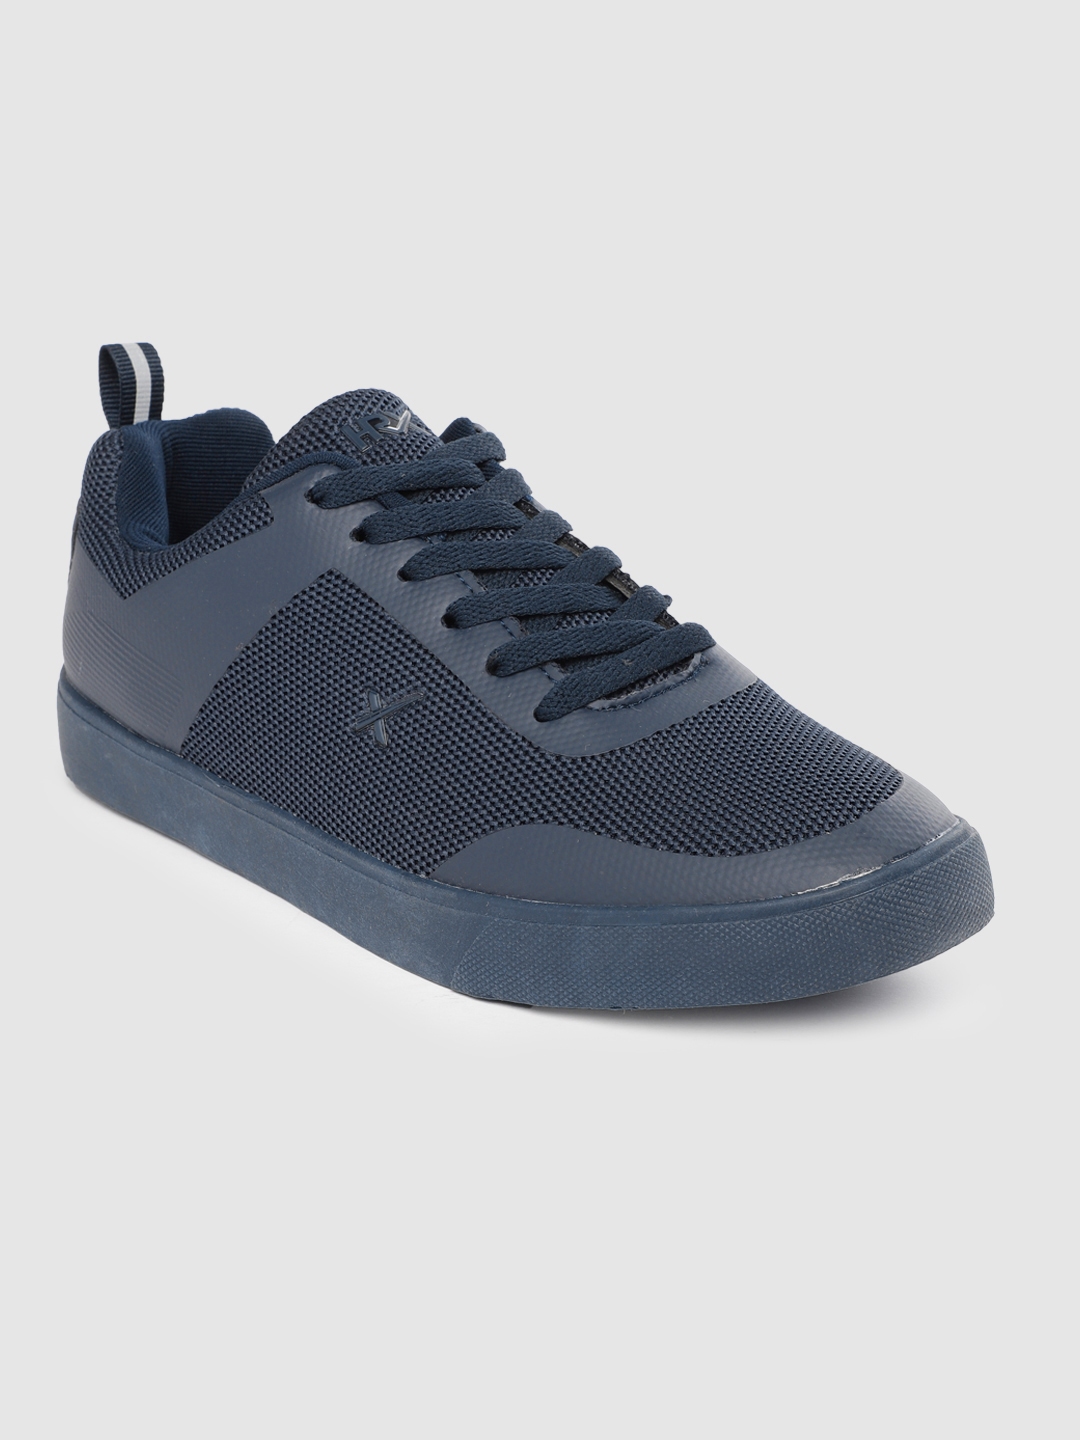 hrx shoes navy blue